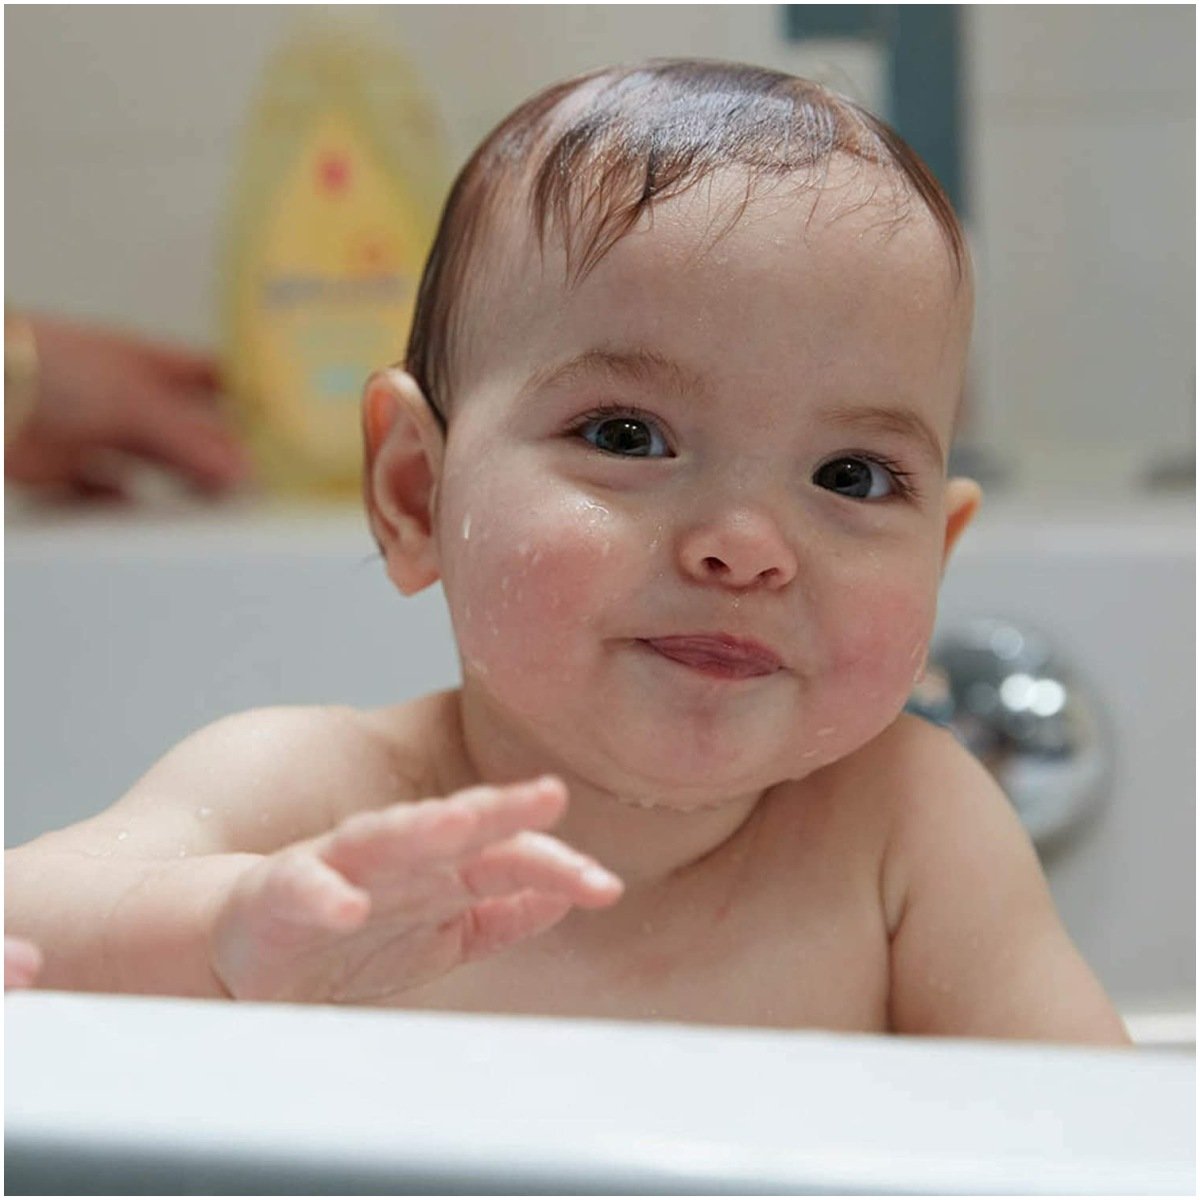 Johnsons Baby Shampoo 750Ml